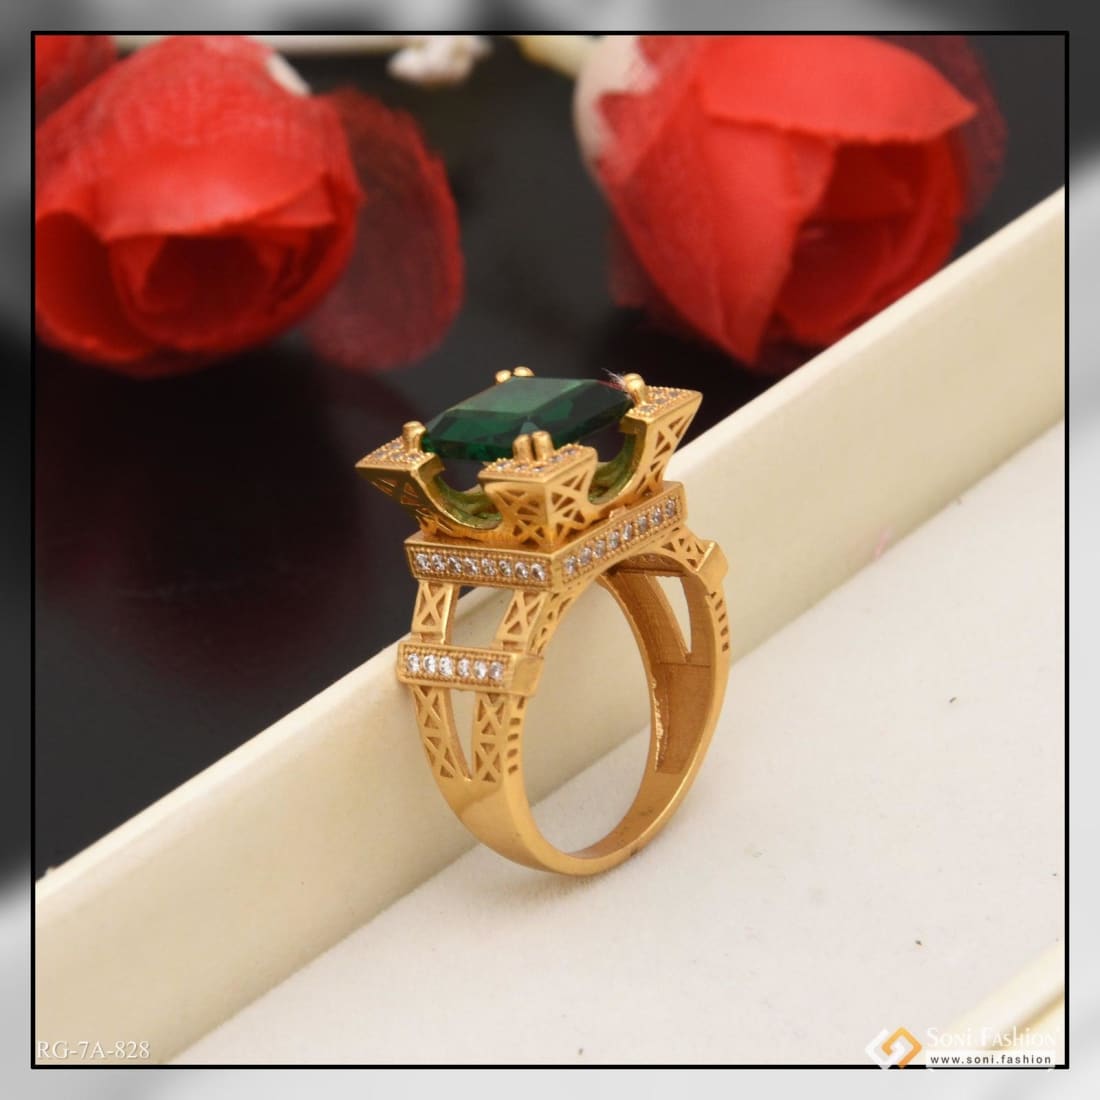 Green sapphire yellow gold engagement ring / Tilia | Eden Garden Jewelry™